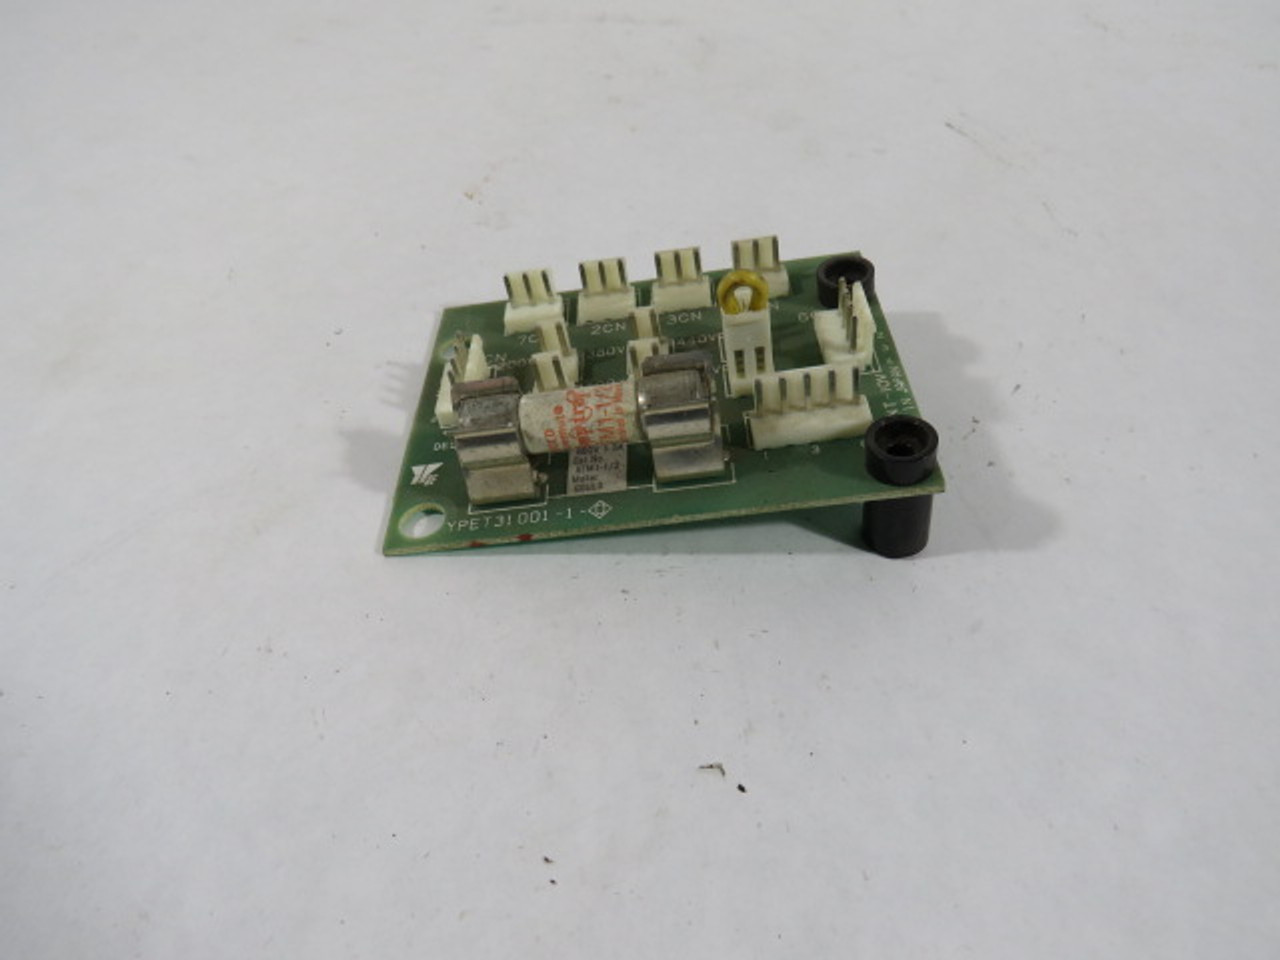 Yaskawa YPET31001-1-0 Interface Board USED